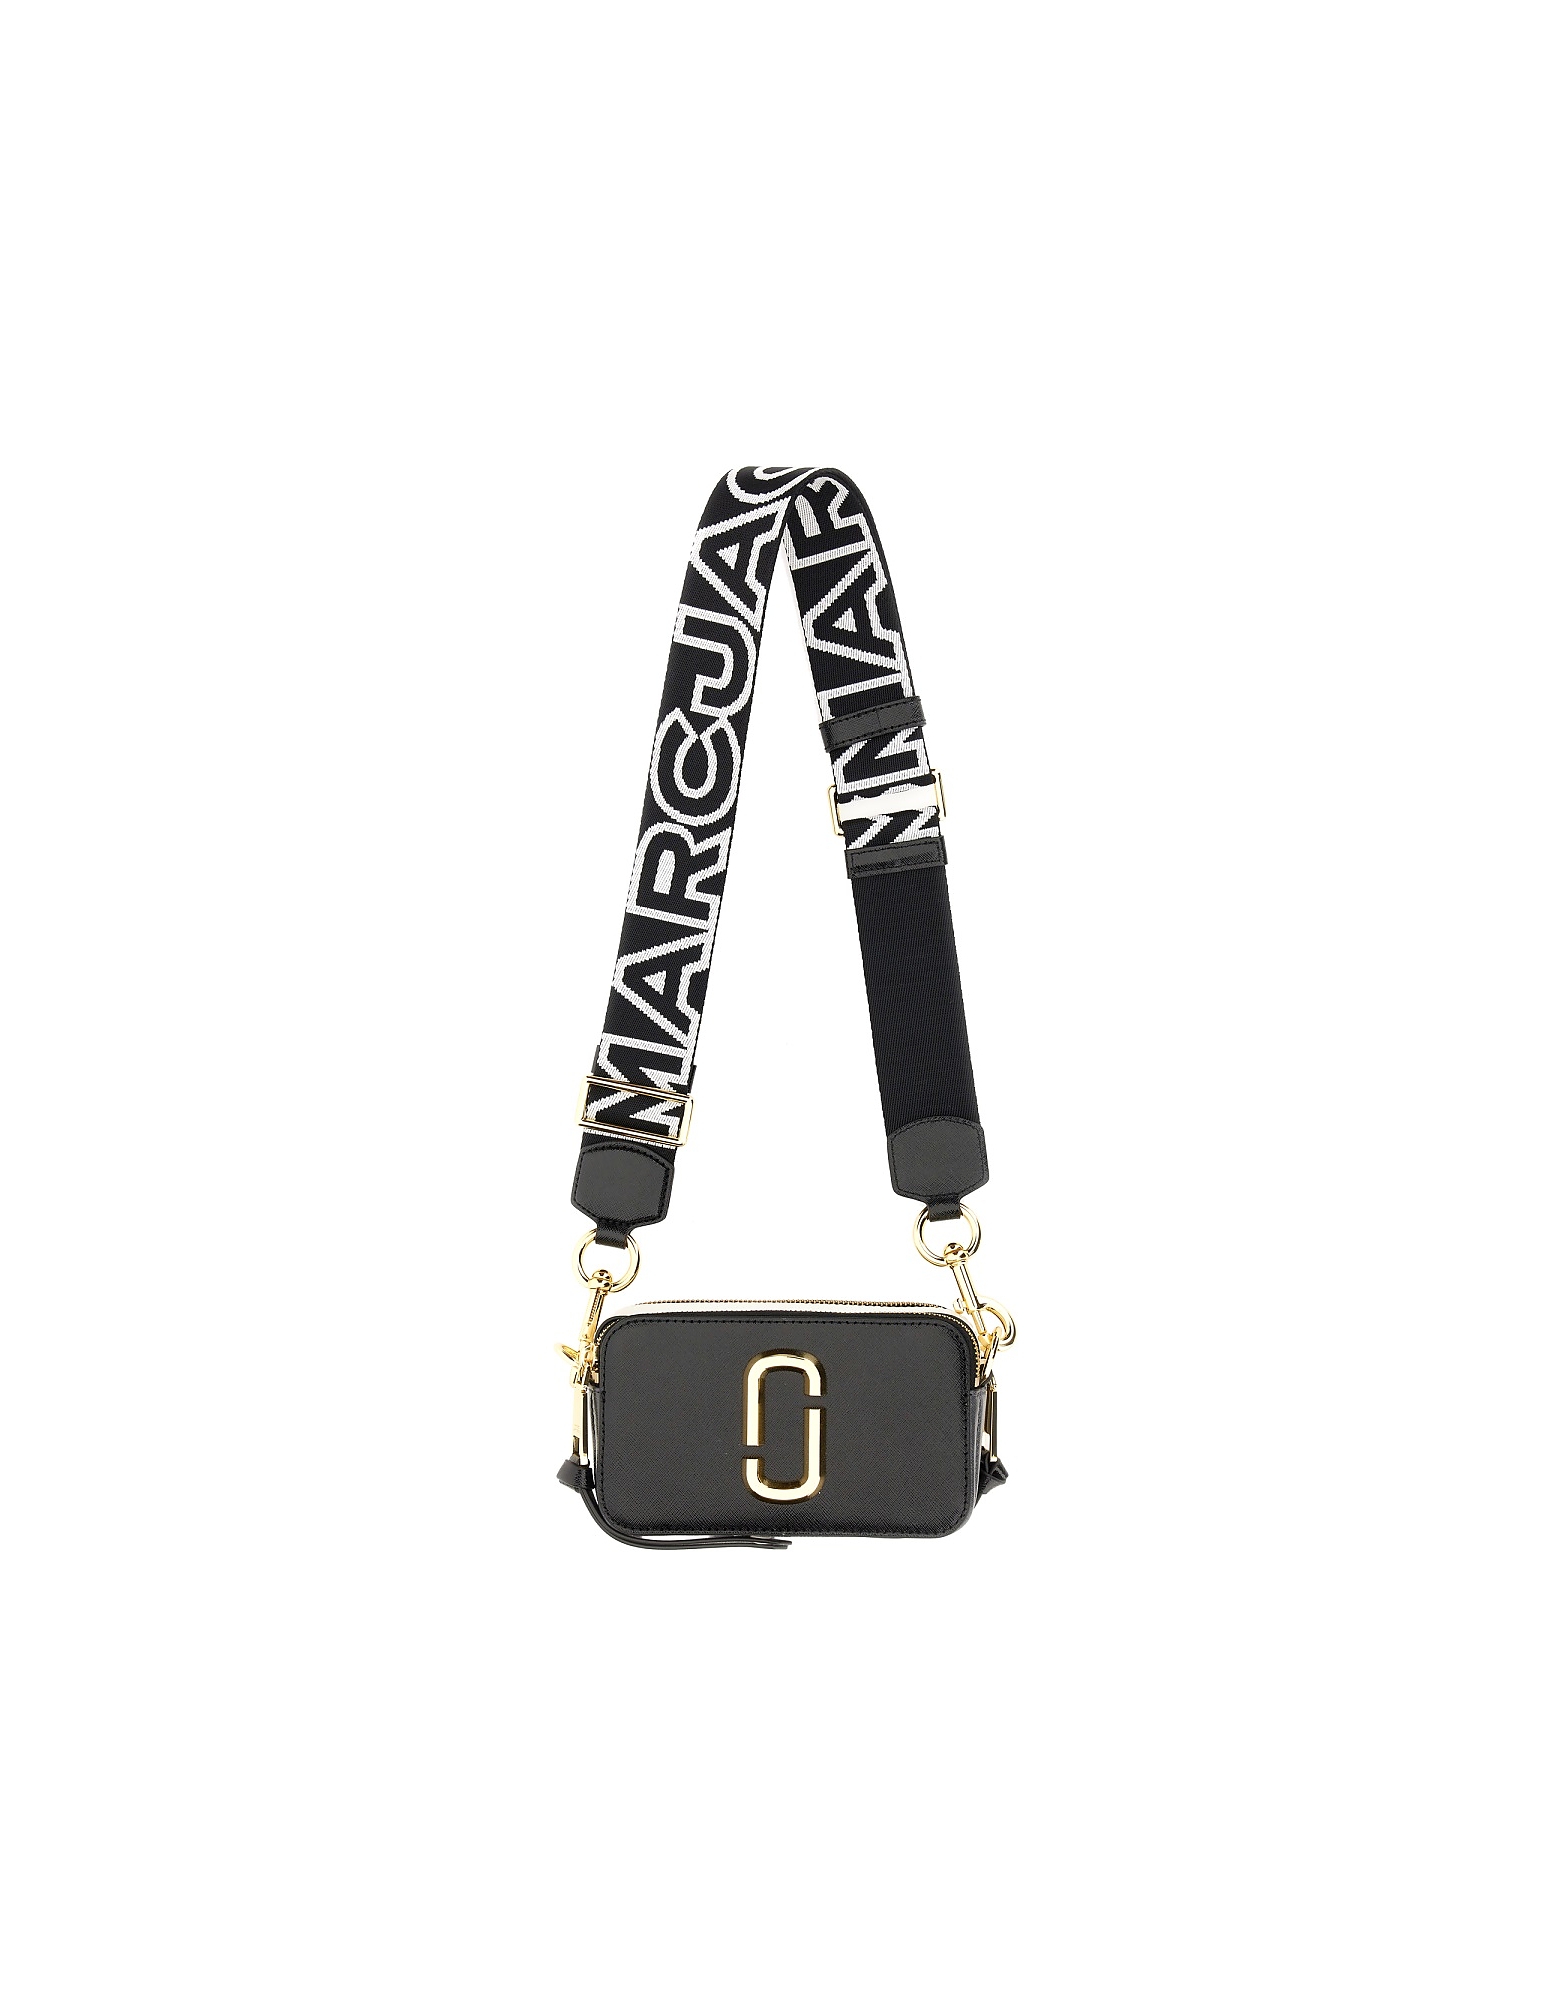 Marc Jacobs Designer Handbags "the Snapshot" Bag In Black